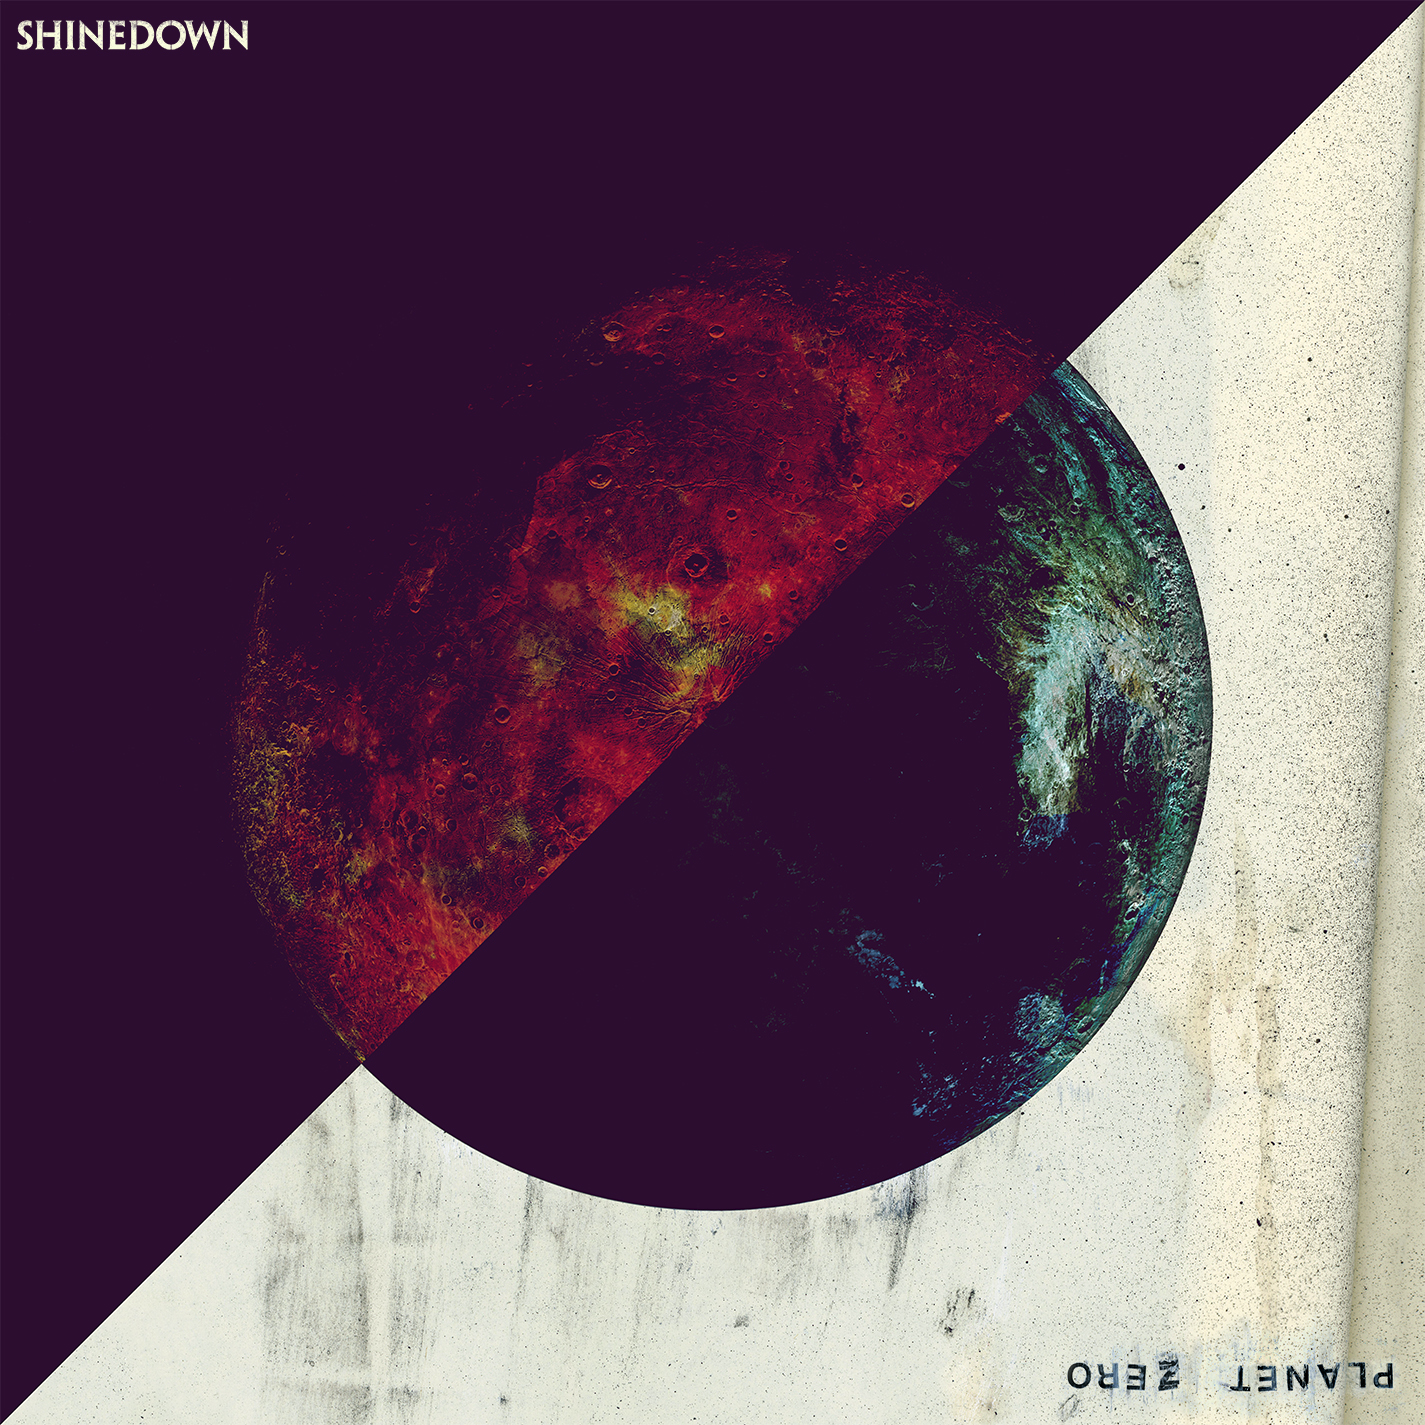 shinedown cover art